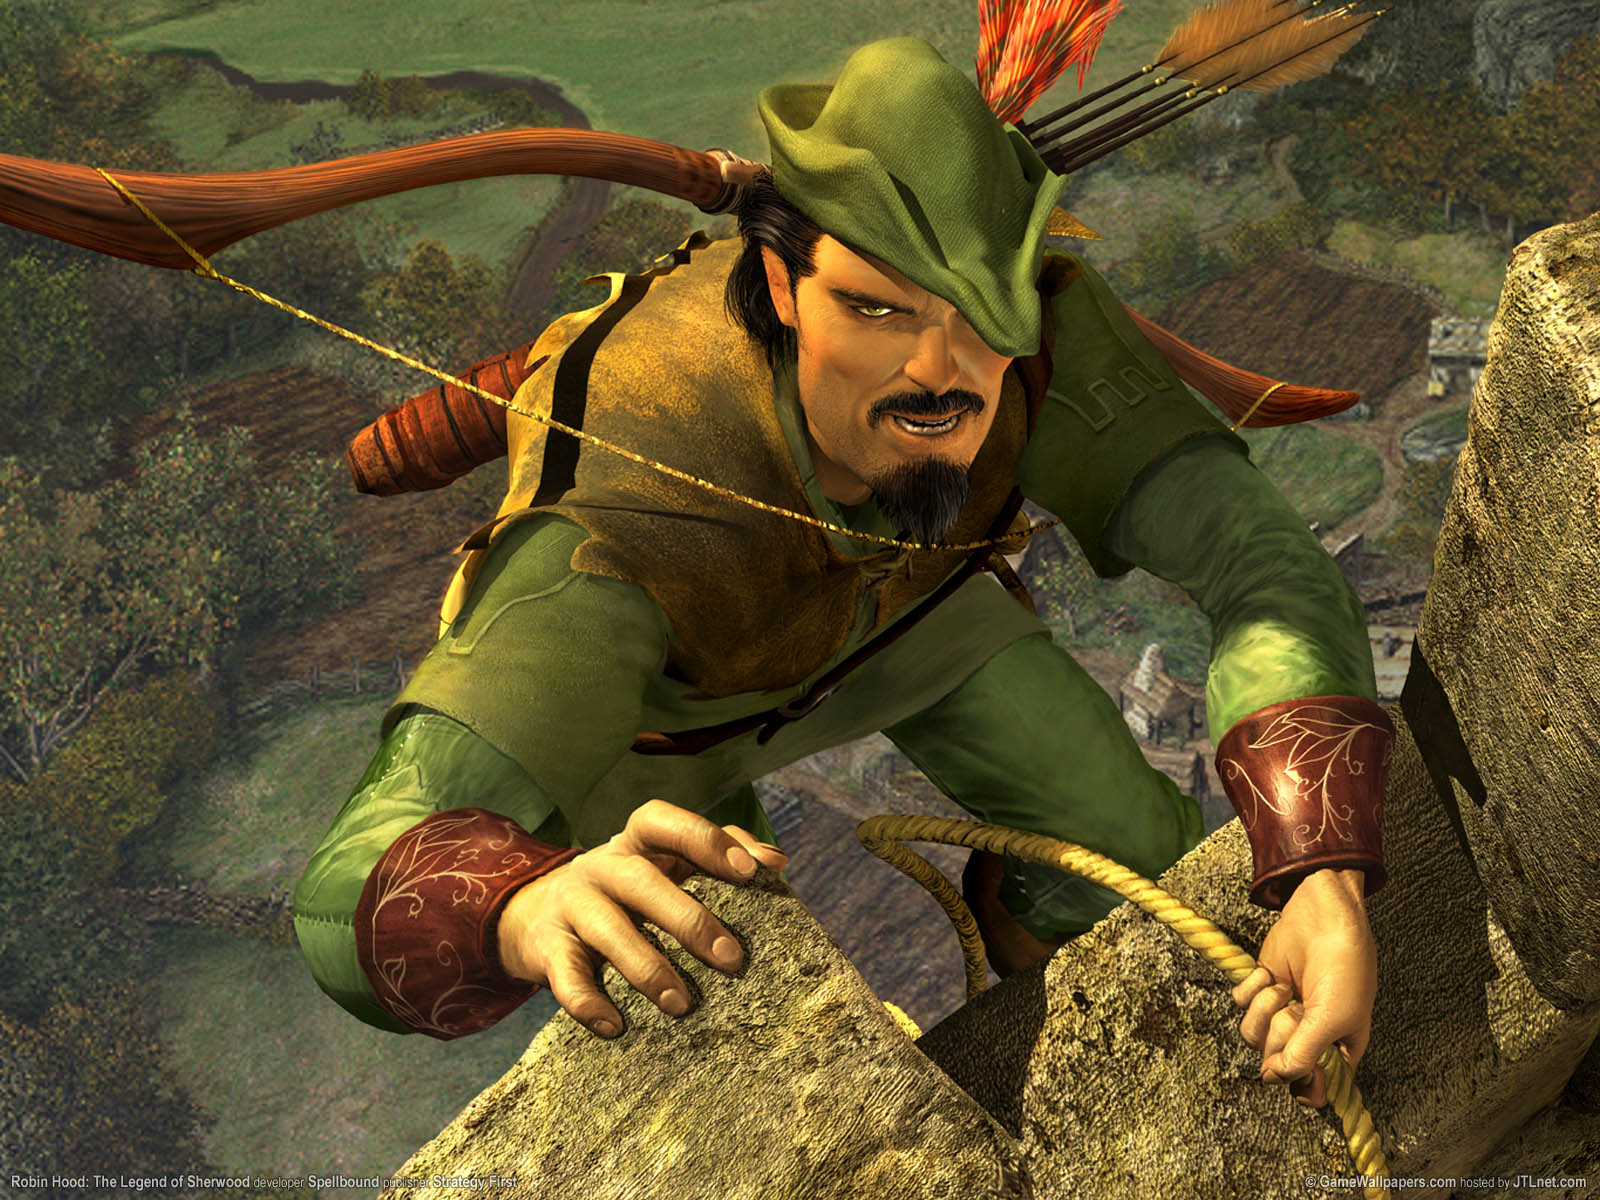 Robin Hood: The Legend of Sherwood fond d'cran 01 1600x1200